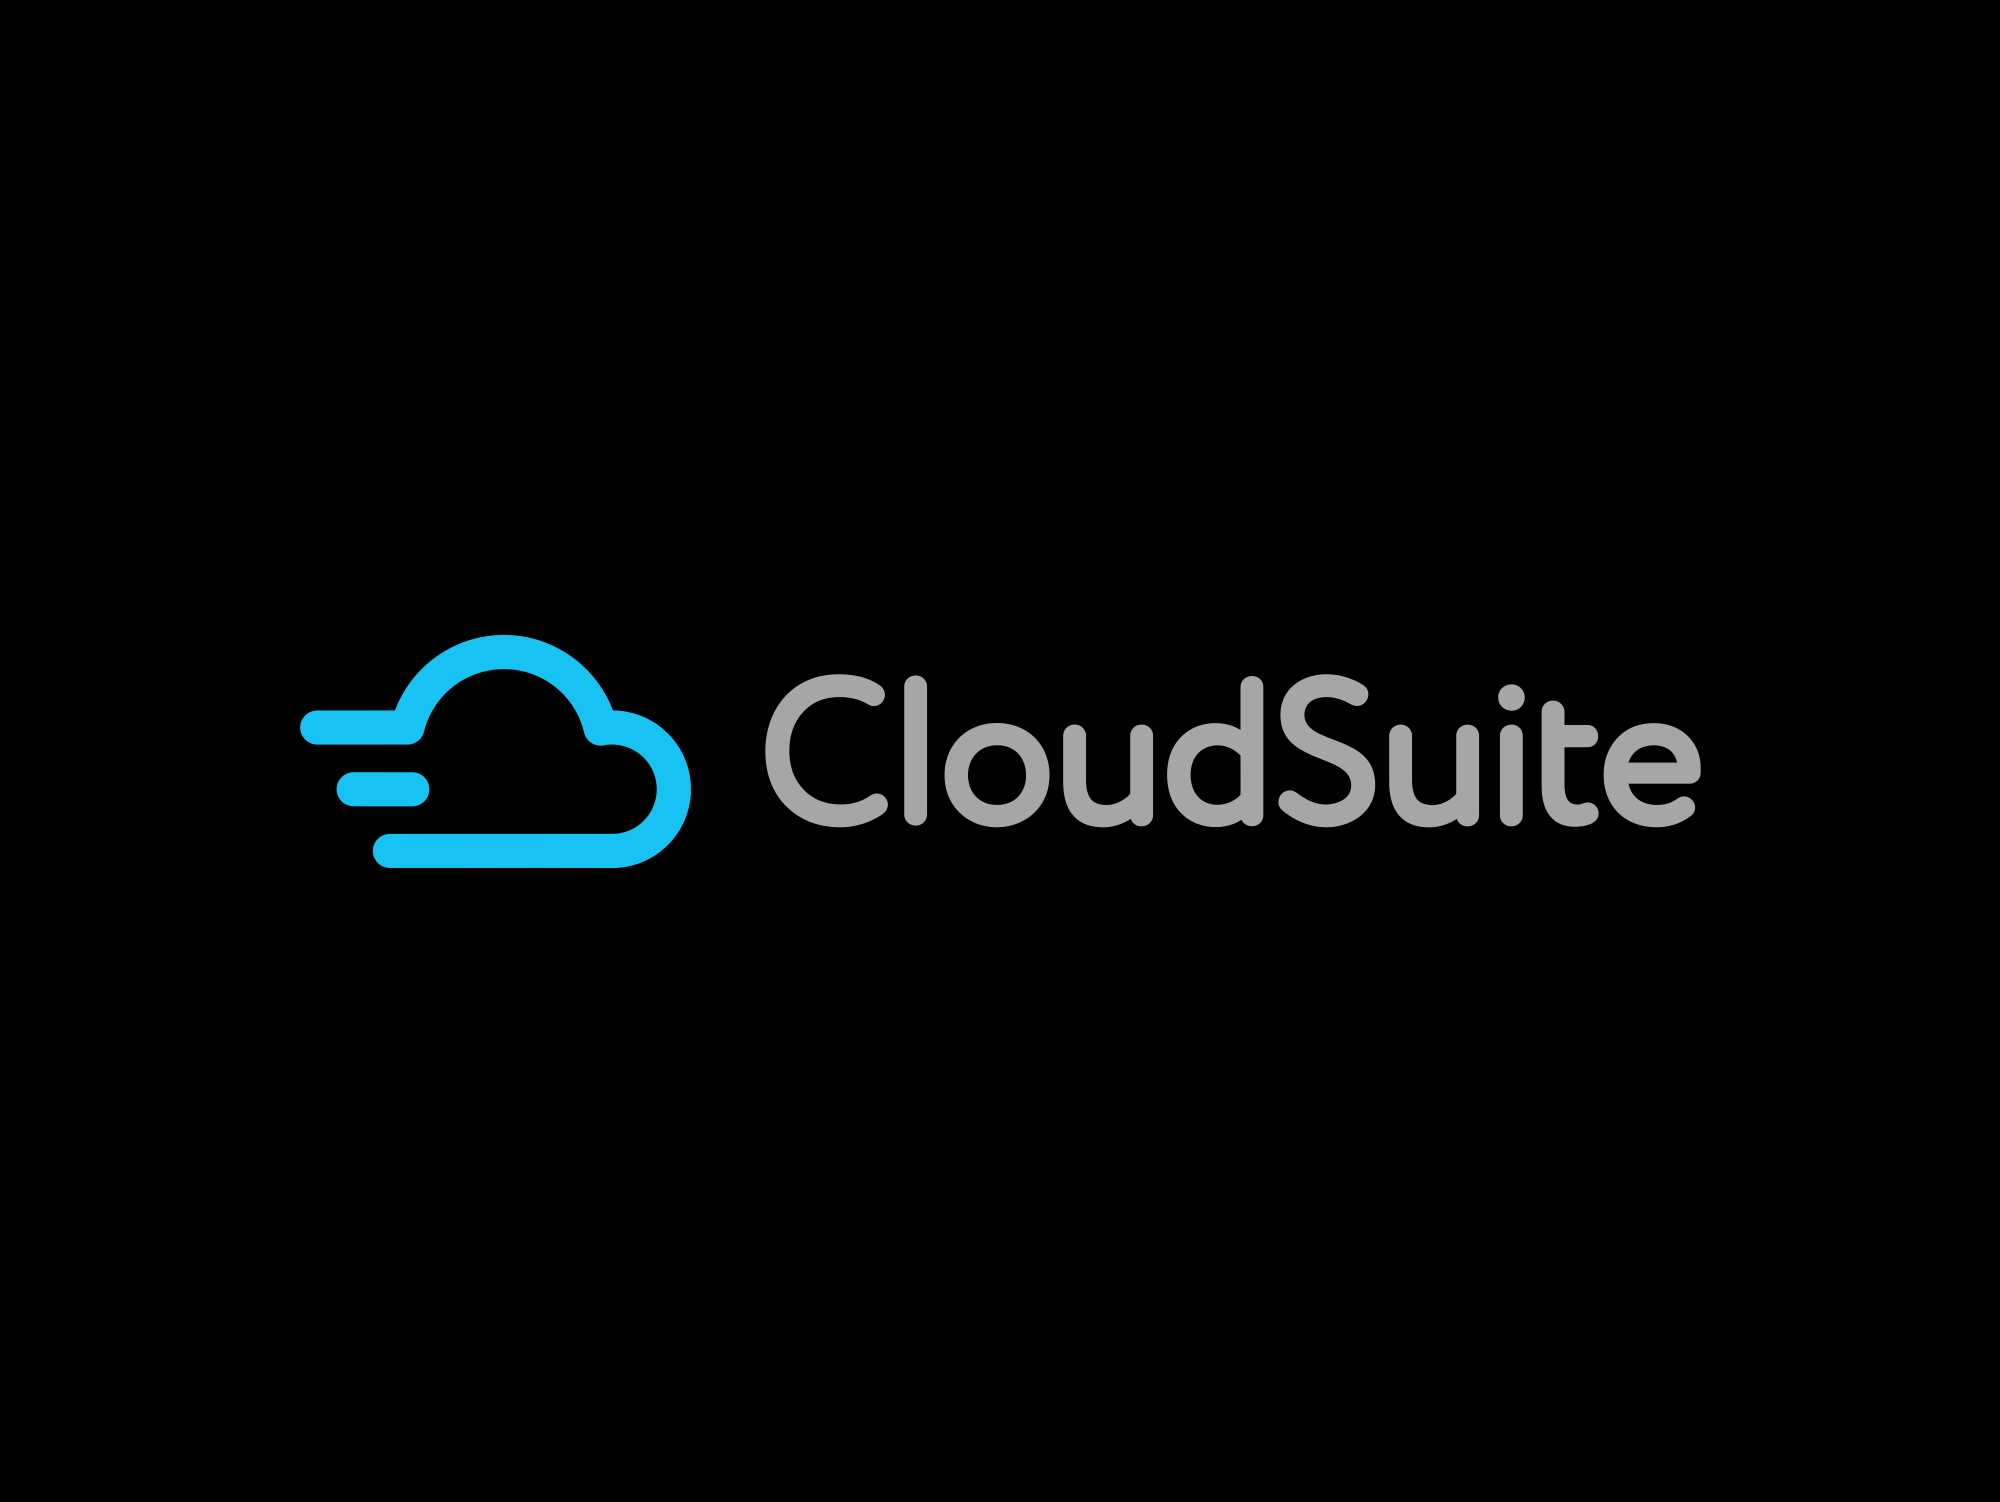 CloudSuite 4.0 is released